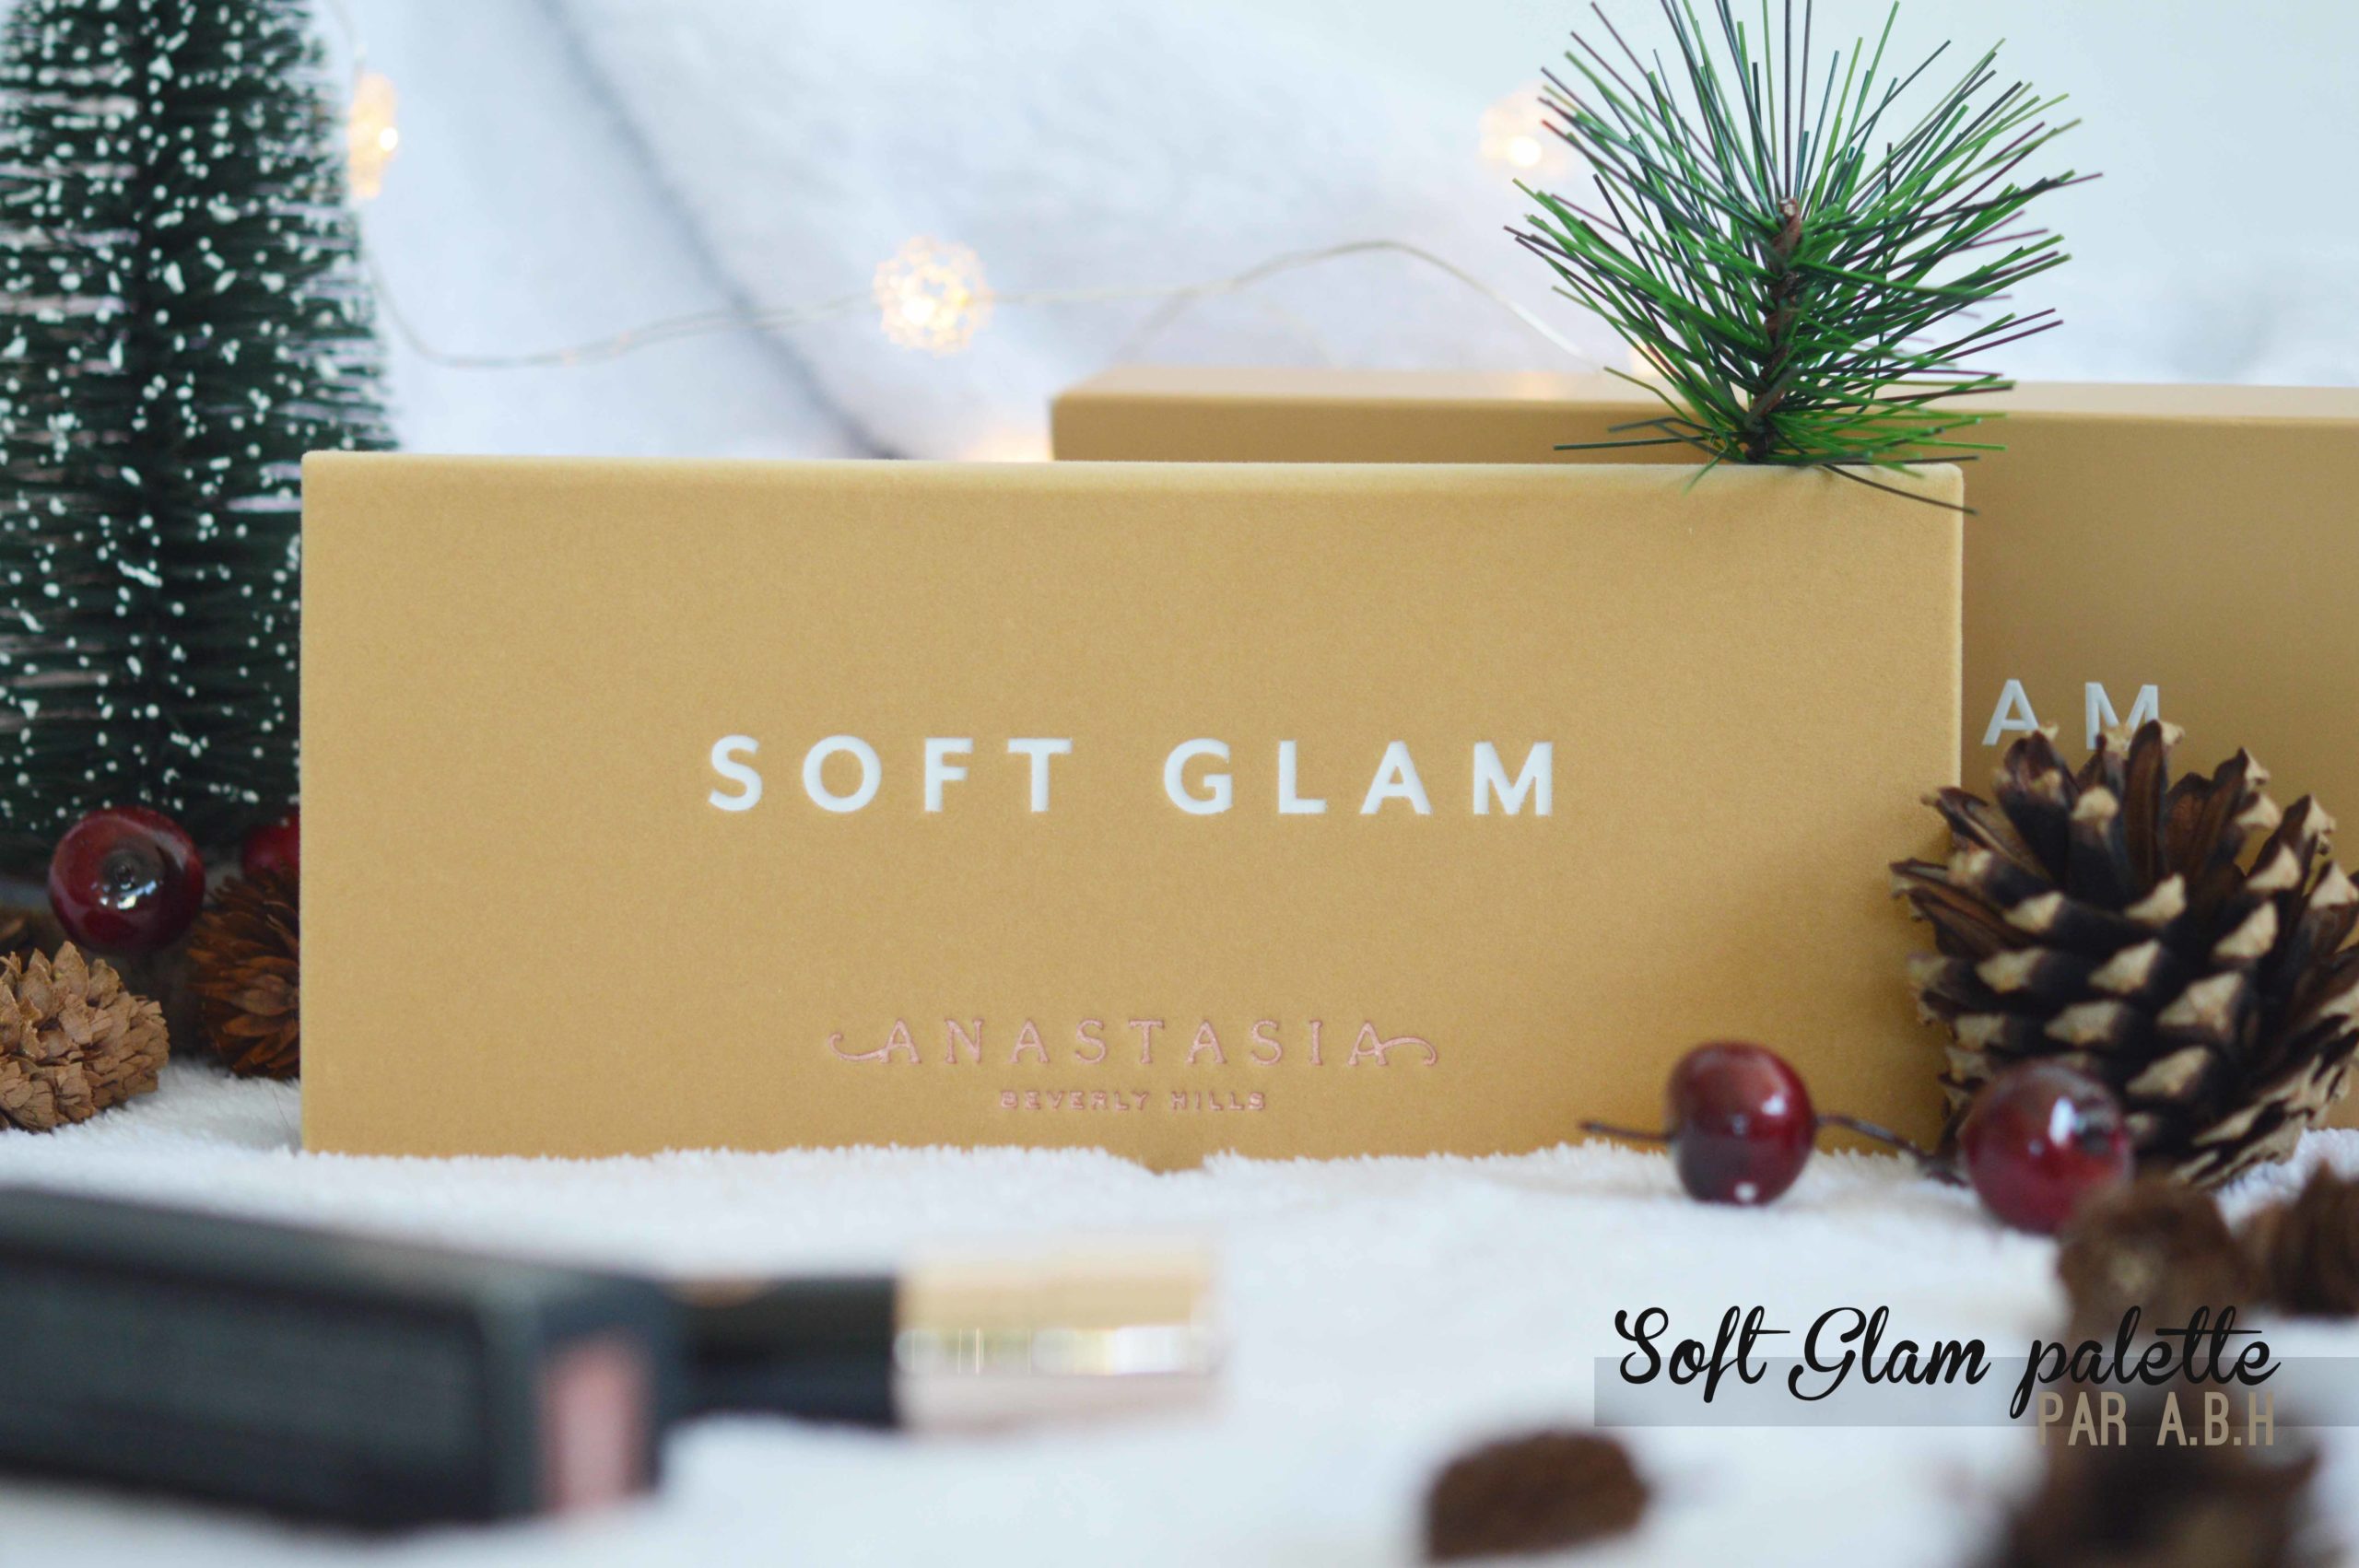 Le packaging de la Soft Glam palette d'Anastasia Beverly Hills